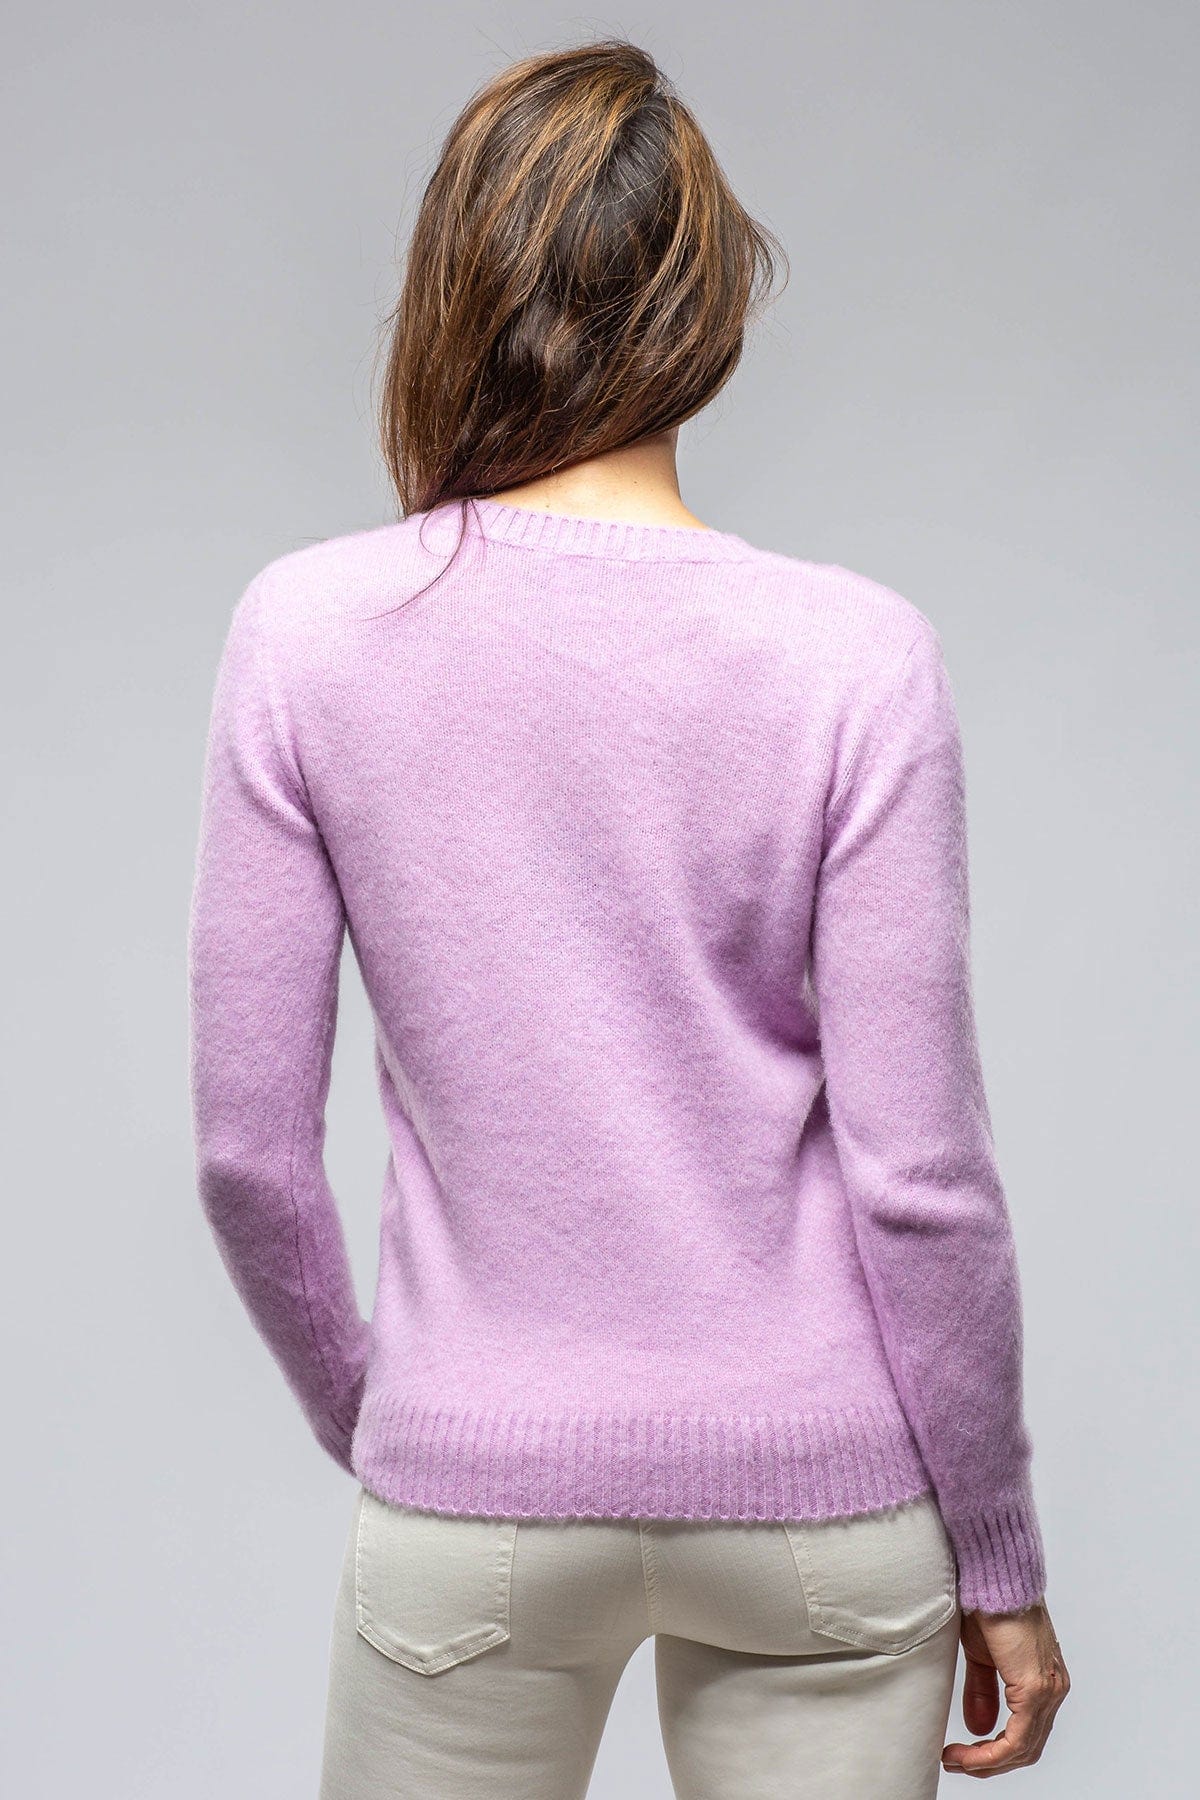 Merit Sweater in Lavender - AXEL'S